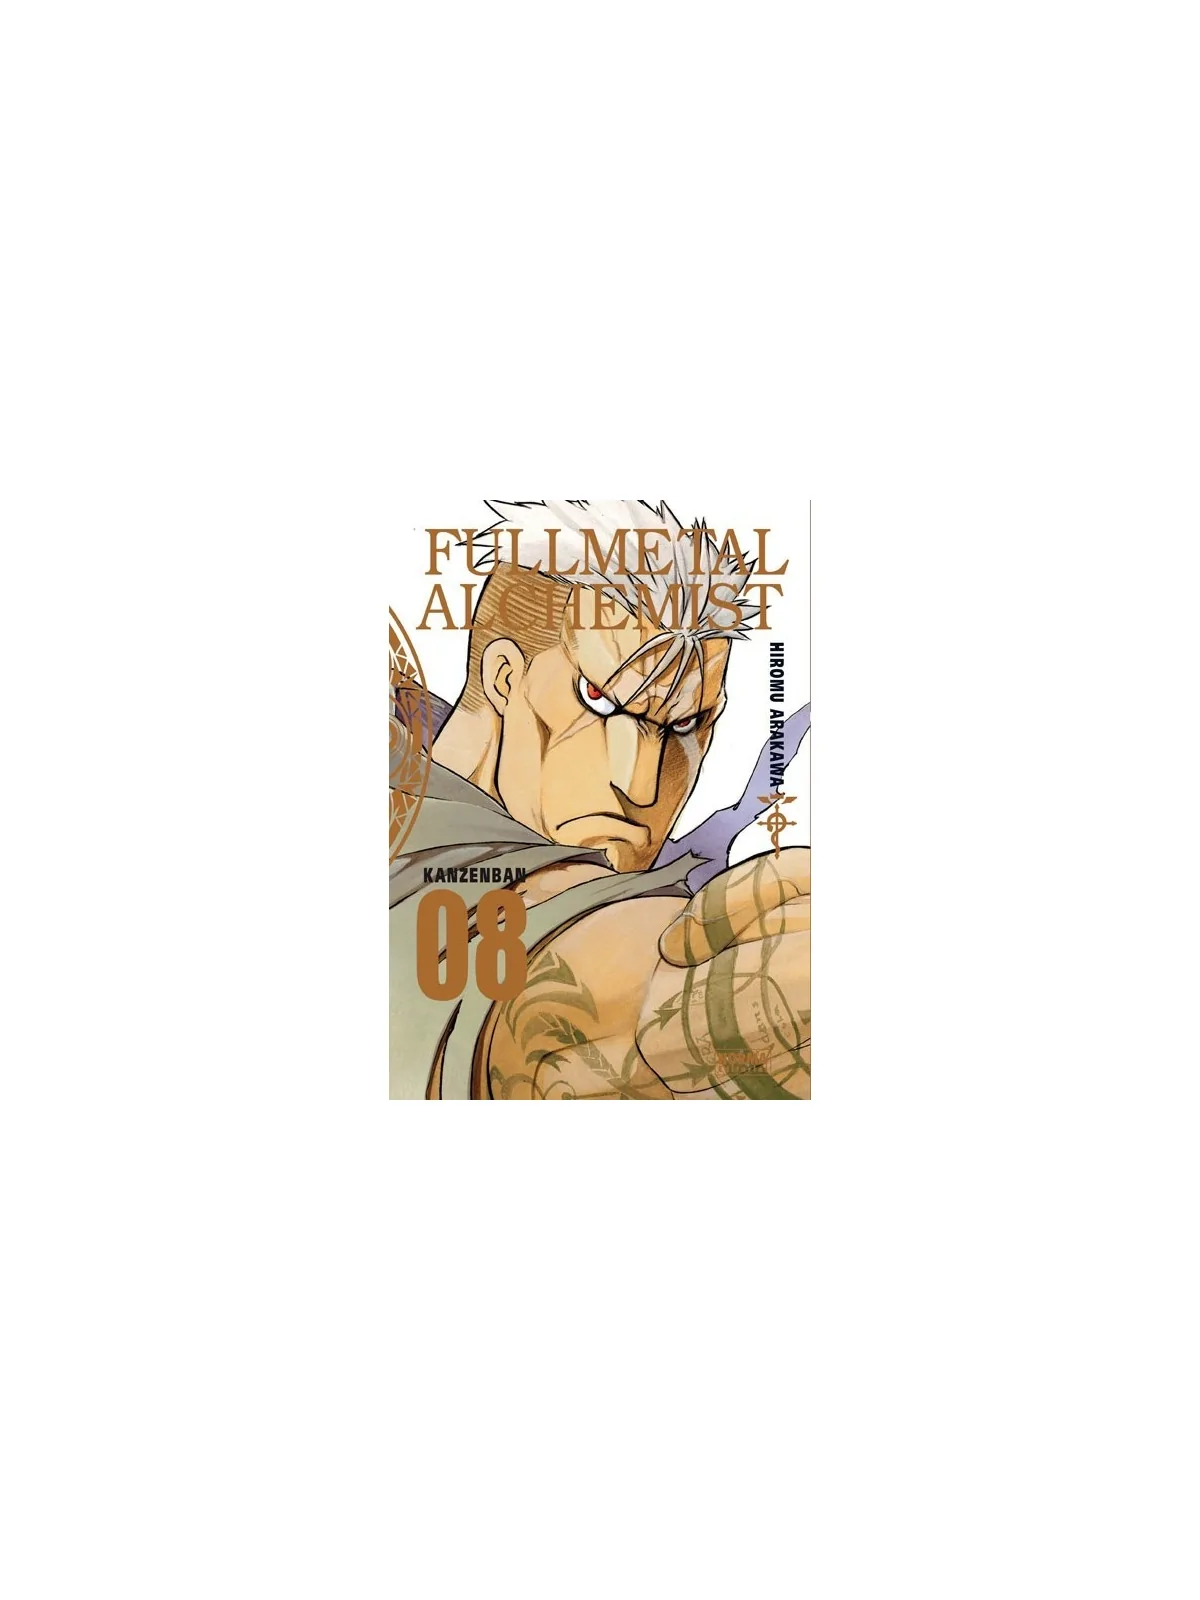 Comprar Fullmetal Alchemist Kanzenban 08 barato al mejor precio 11,35 